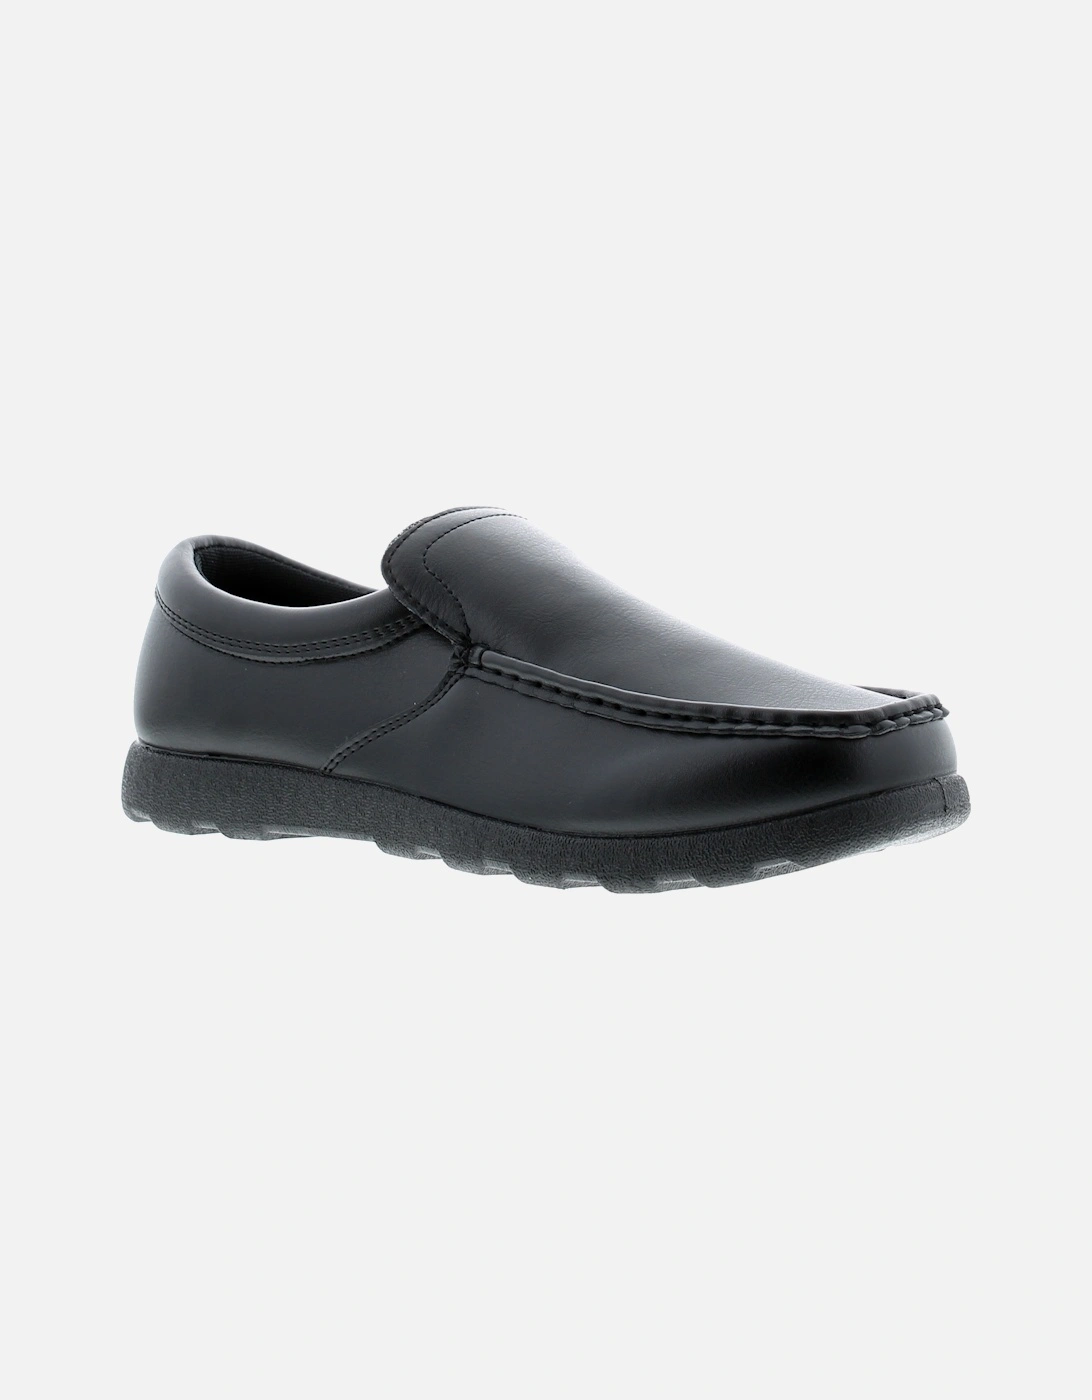 Mens Smart Shoes Valley Slip On black UK Size, 6 of 5